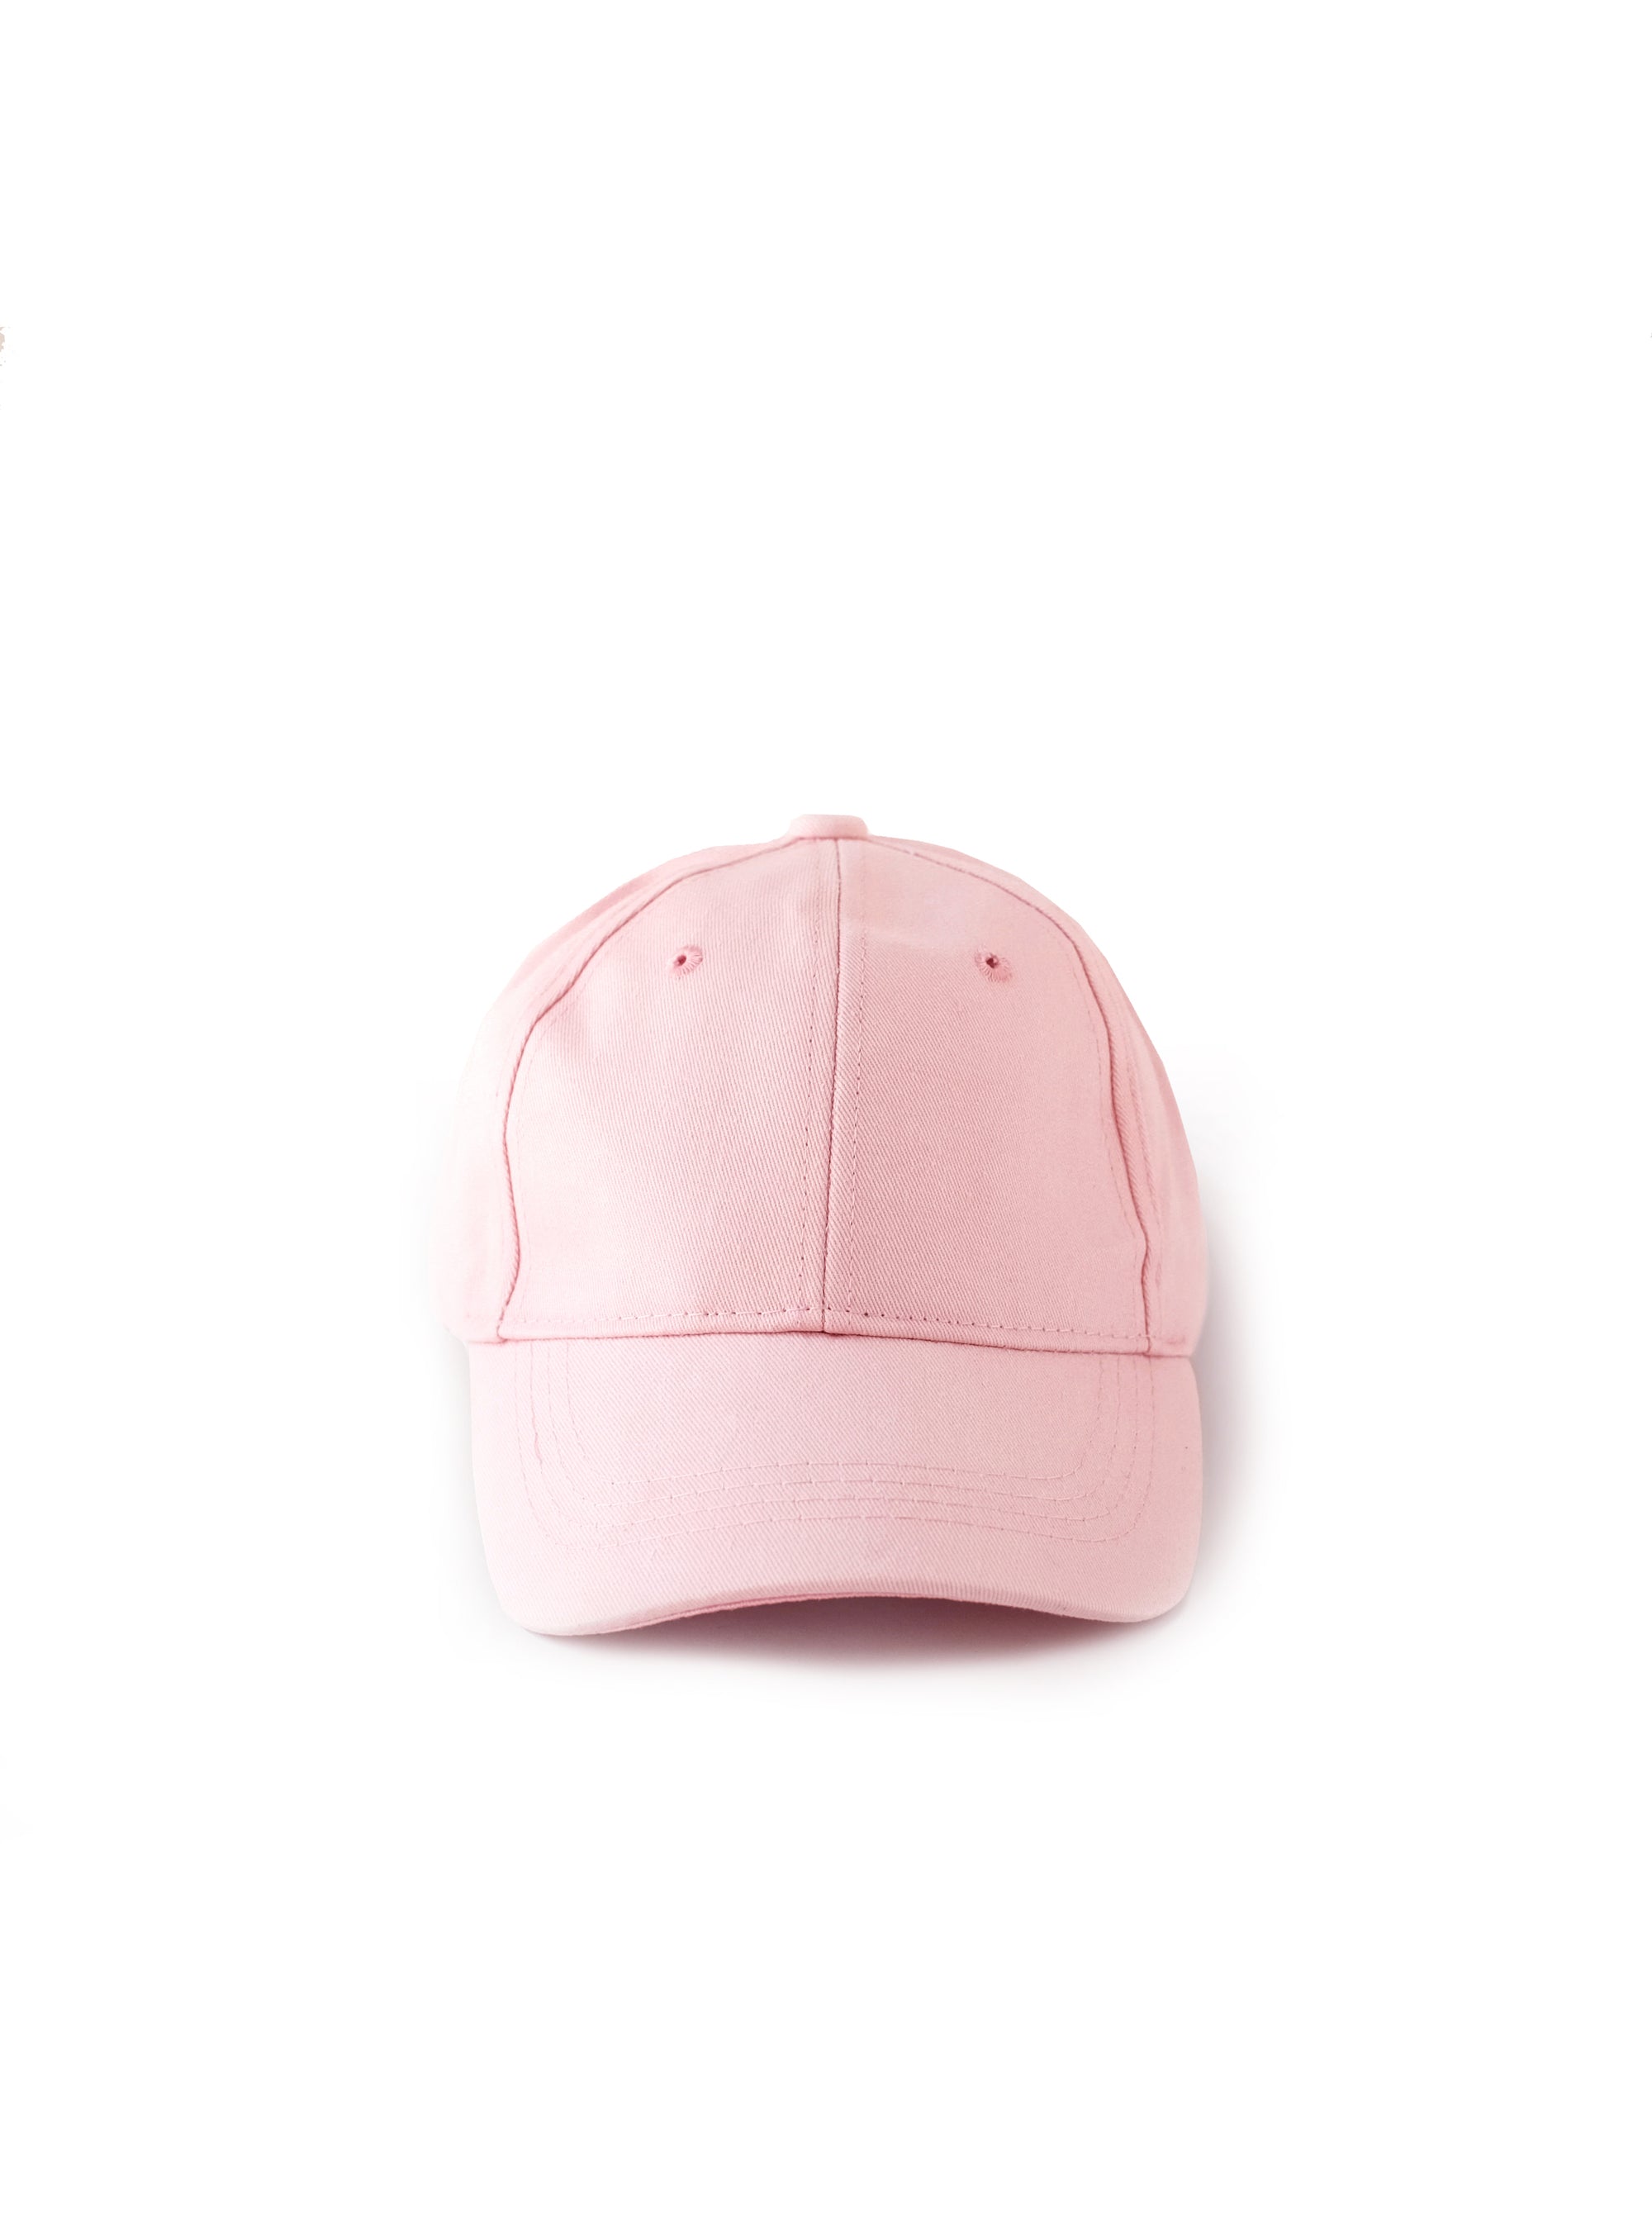 macaron pink cap with adjustable strap